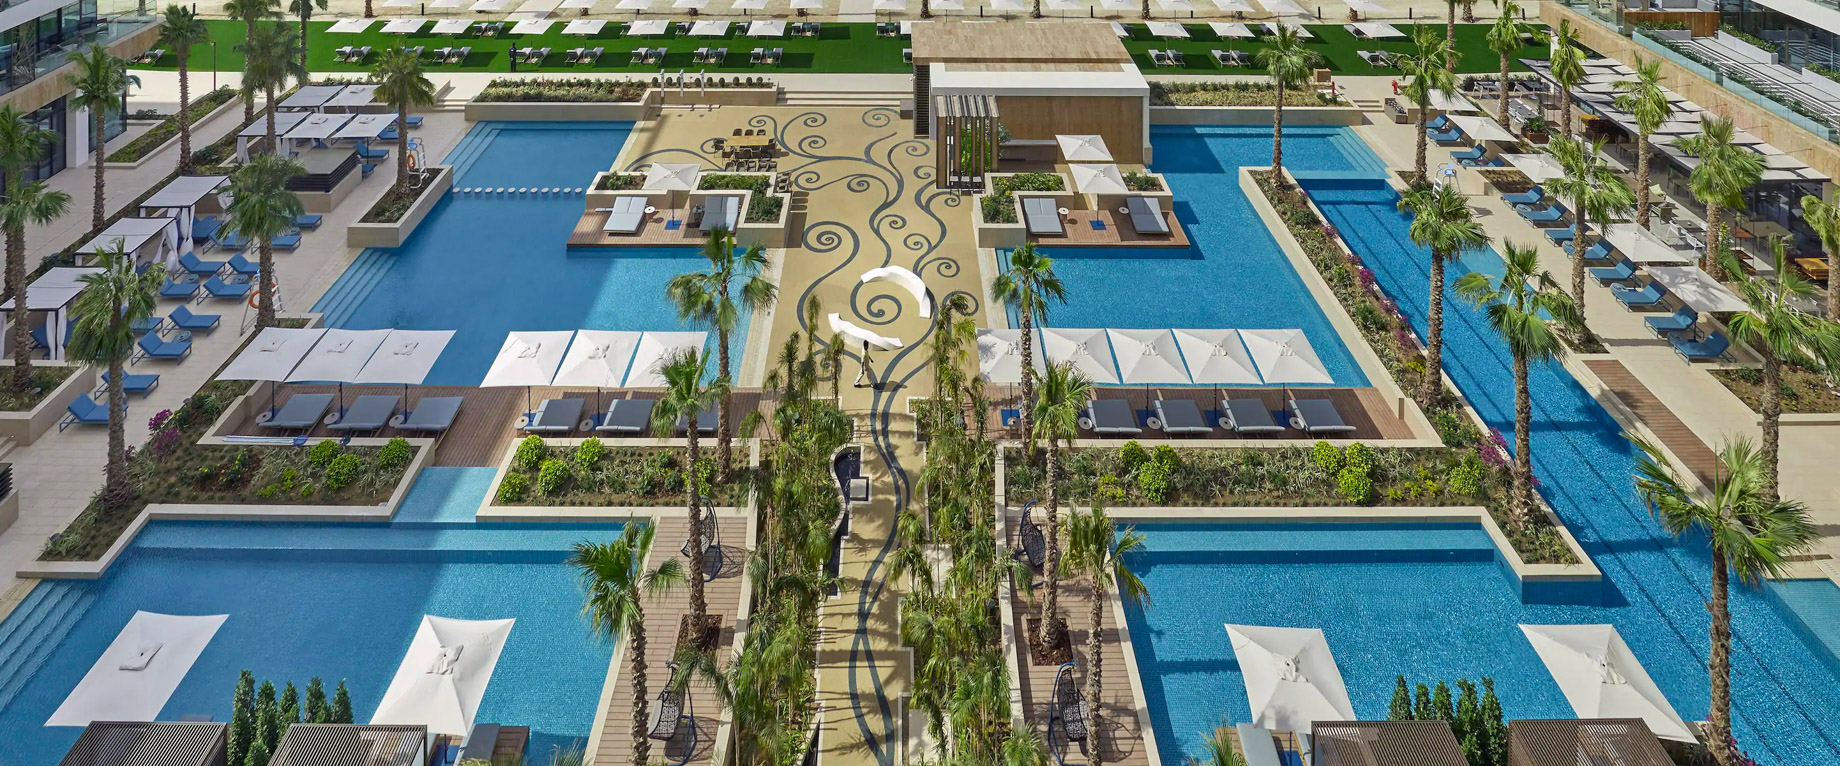 Mandarin Oriental Jumeira, Dubai Resort – Jumeirah, Dubai, UAE – Pool Deck Aerial View